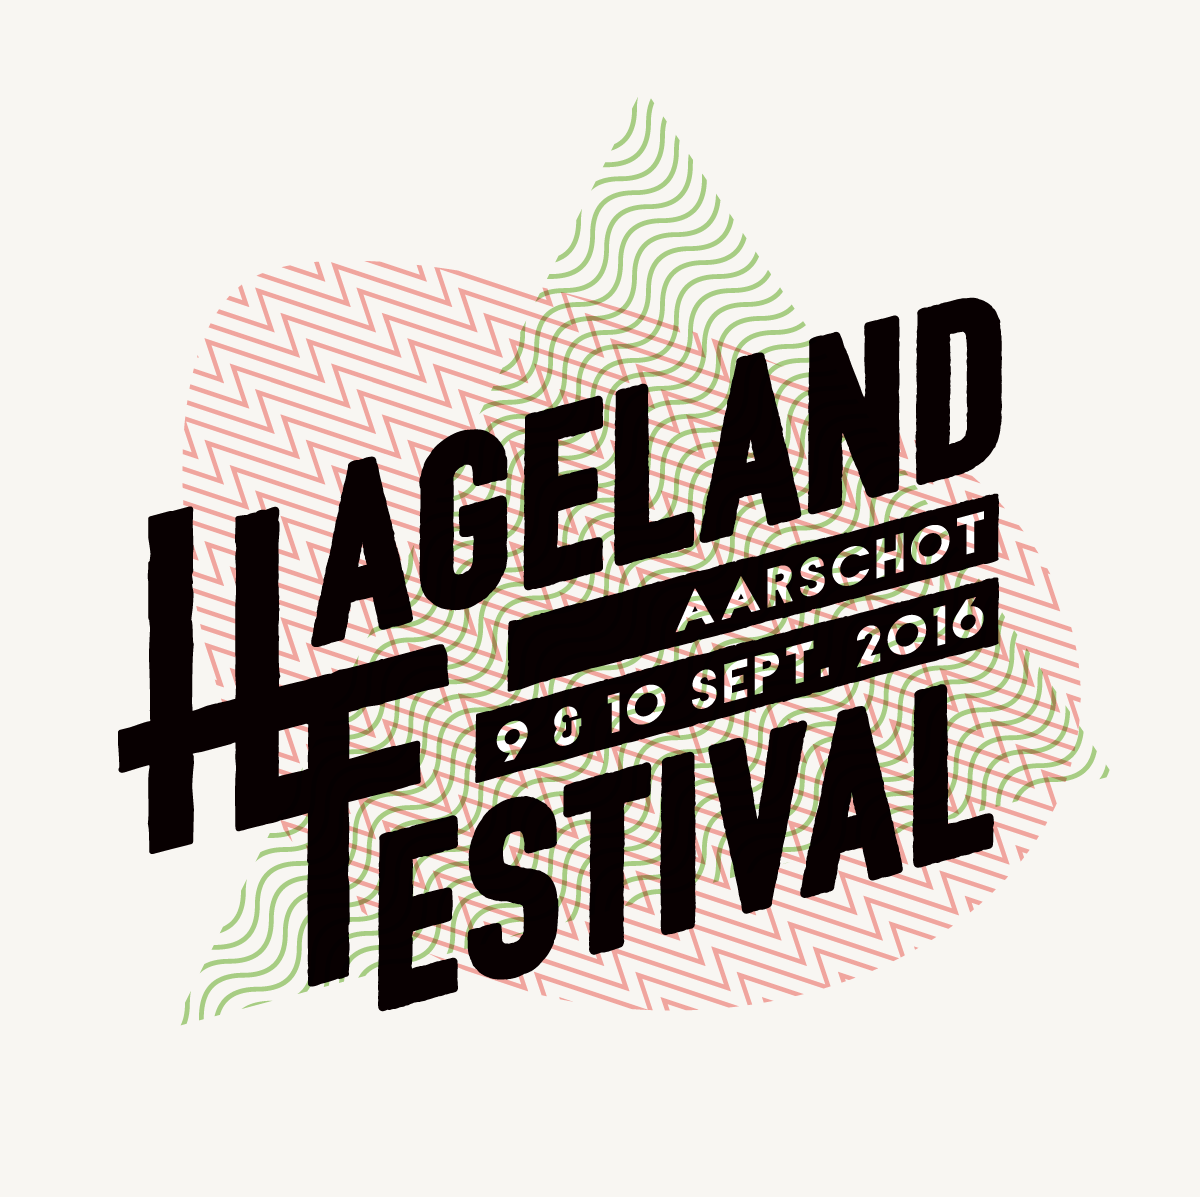 Hageland-Festival-Aarschot-2016-tekst-logo-design